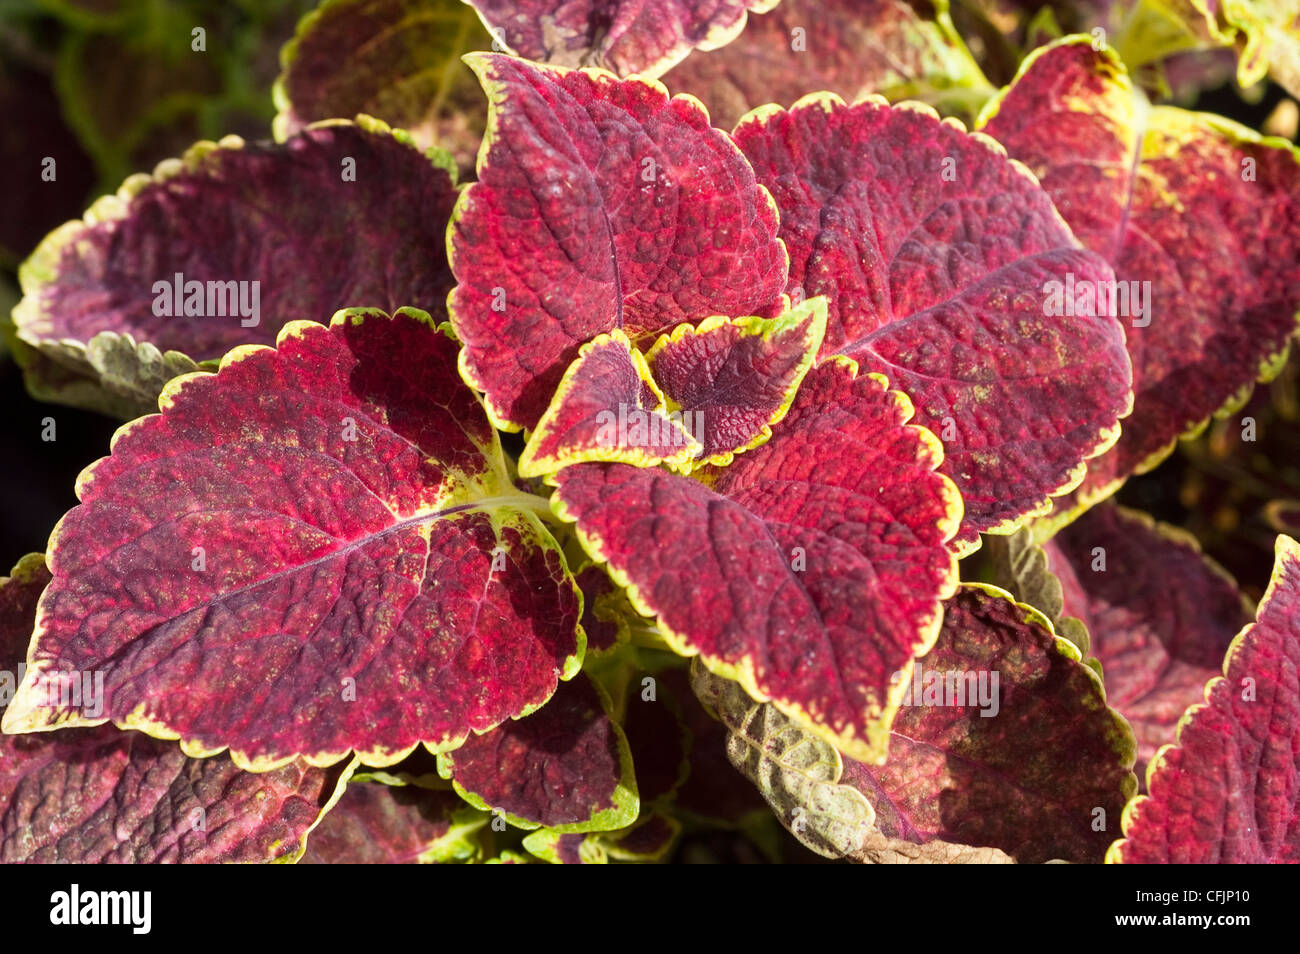 Red violet green leaves, foliage of coleus, Solenostemon scutellarioides var Dipt in Vine Stock Photo